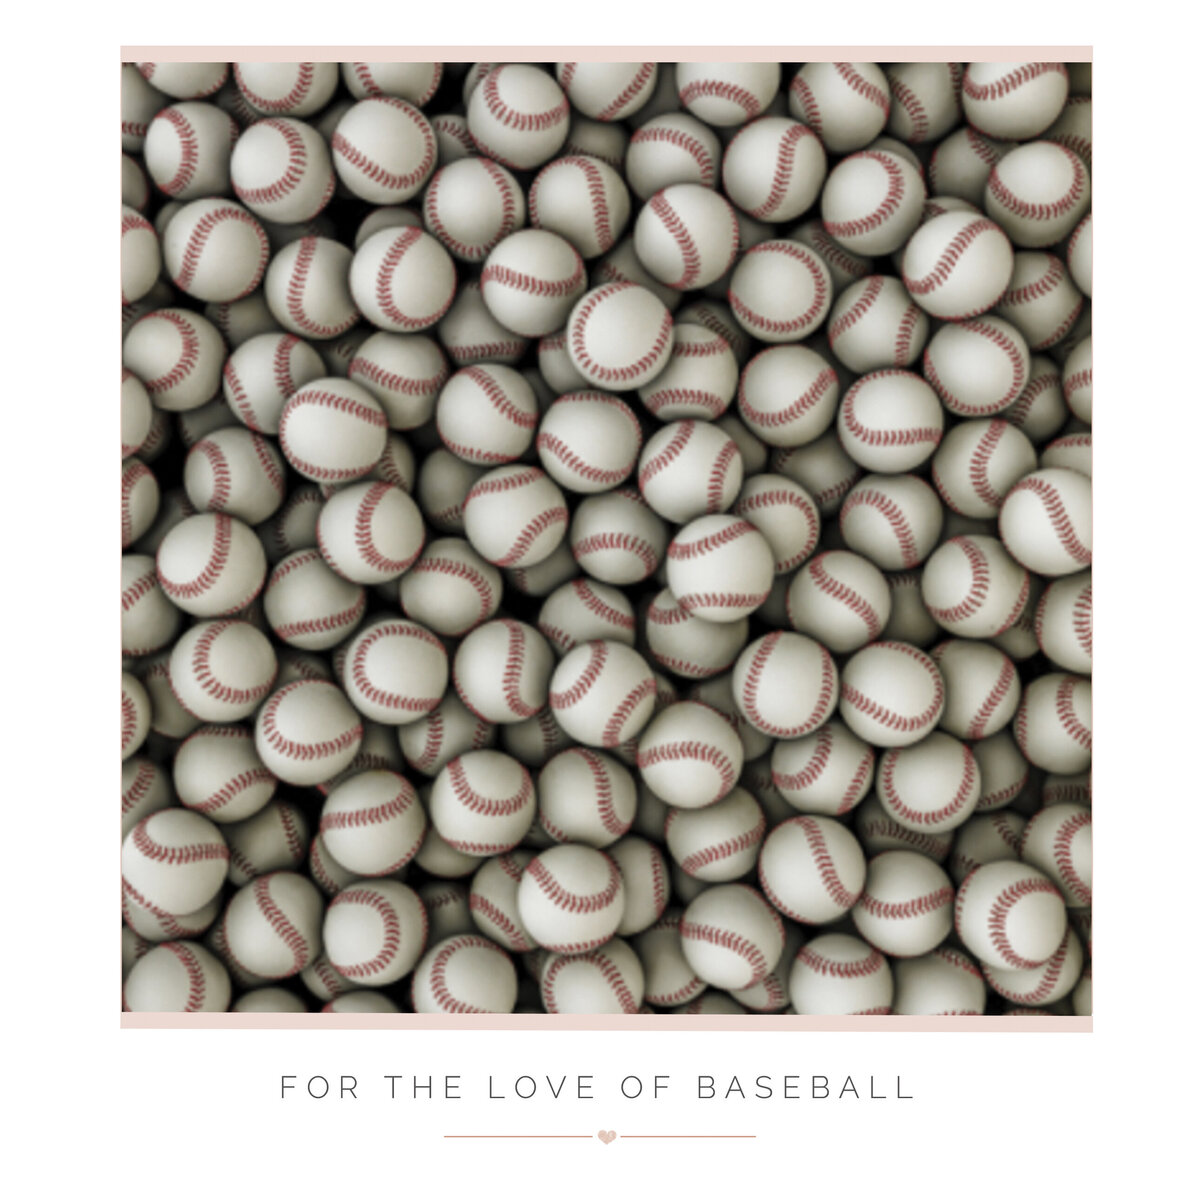 For the Love of Baseball